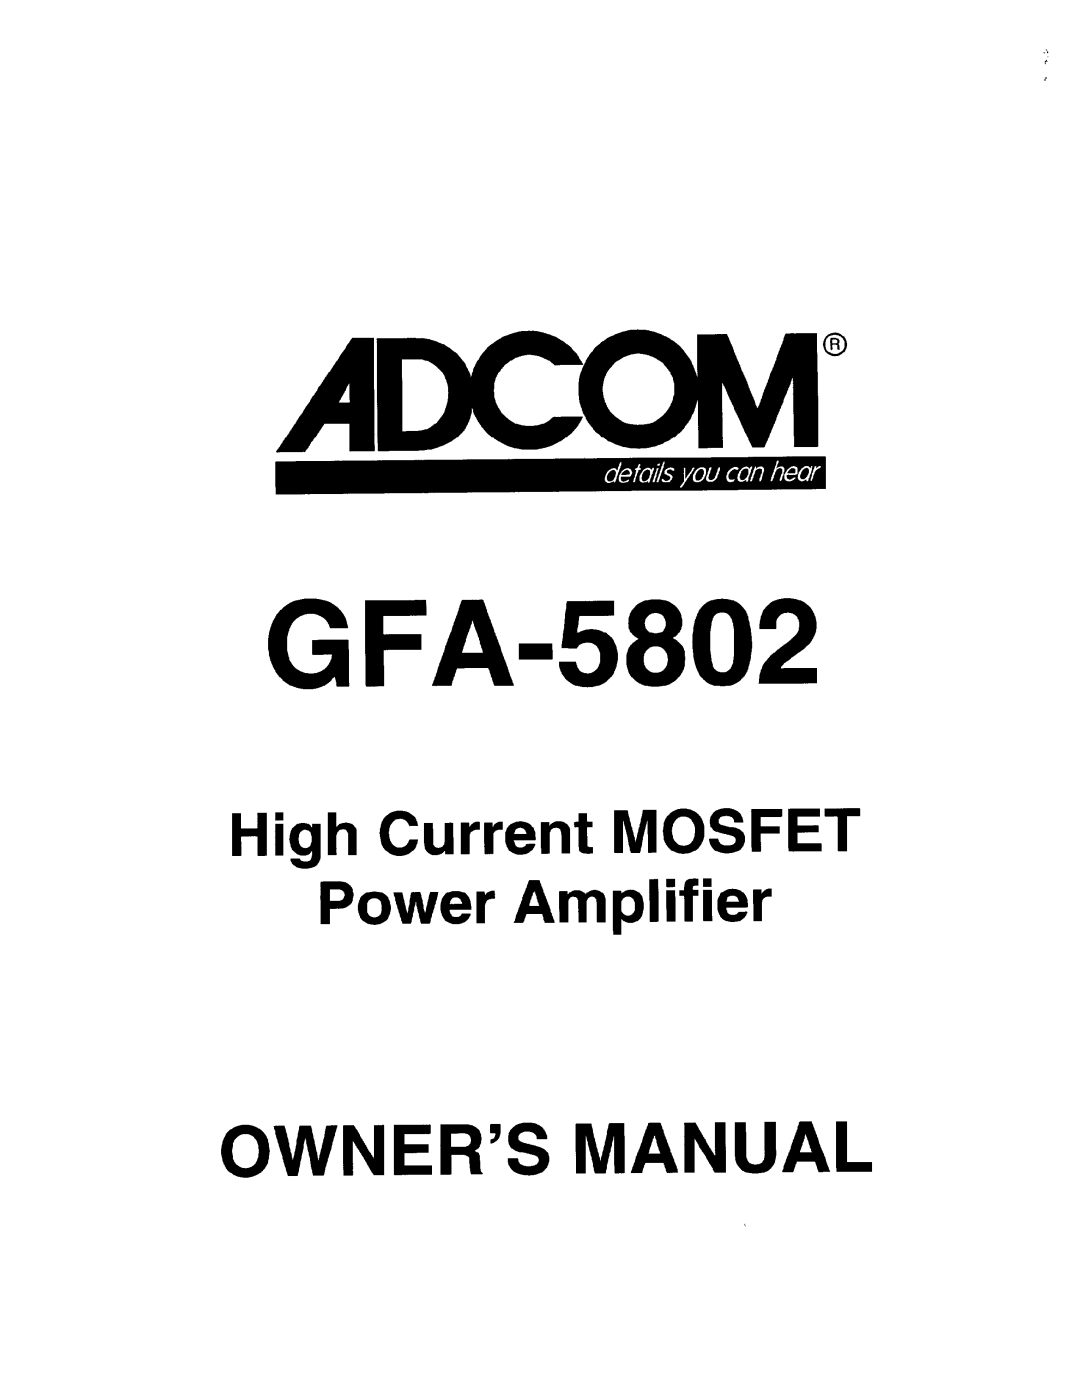 Adcom GFA-5802 manual 